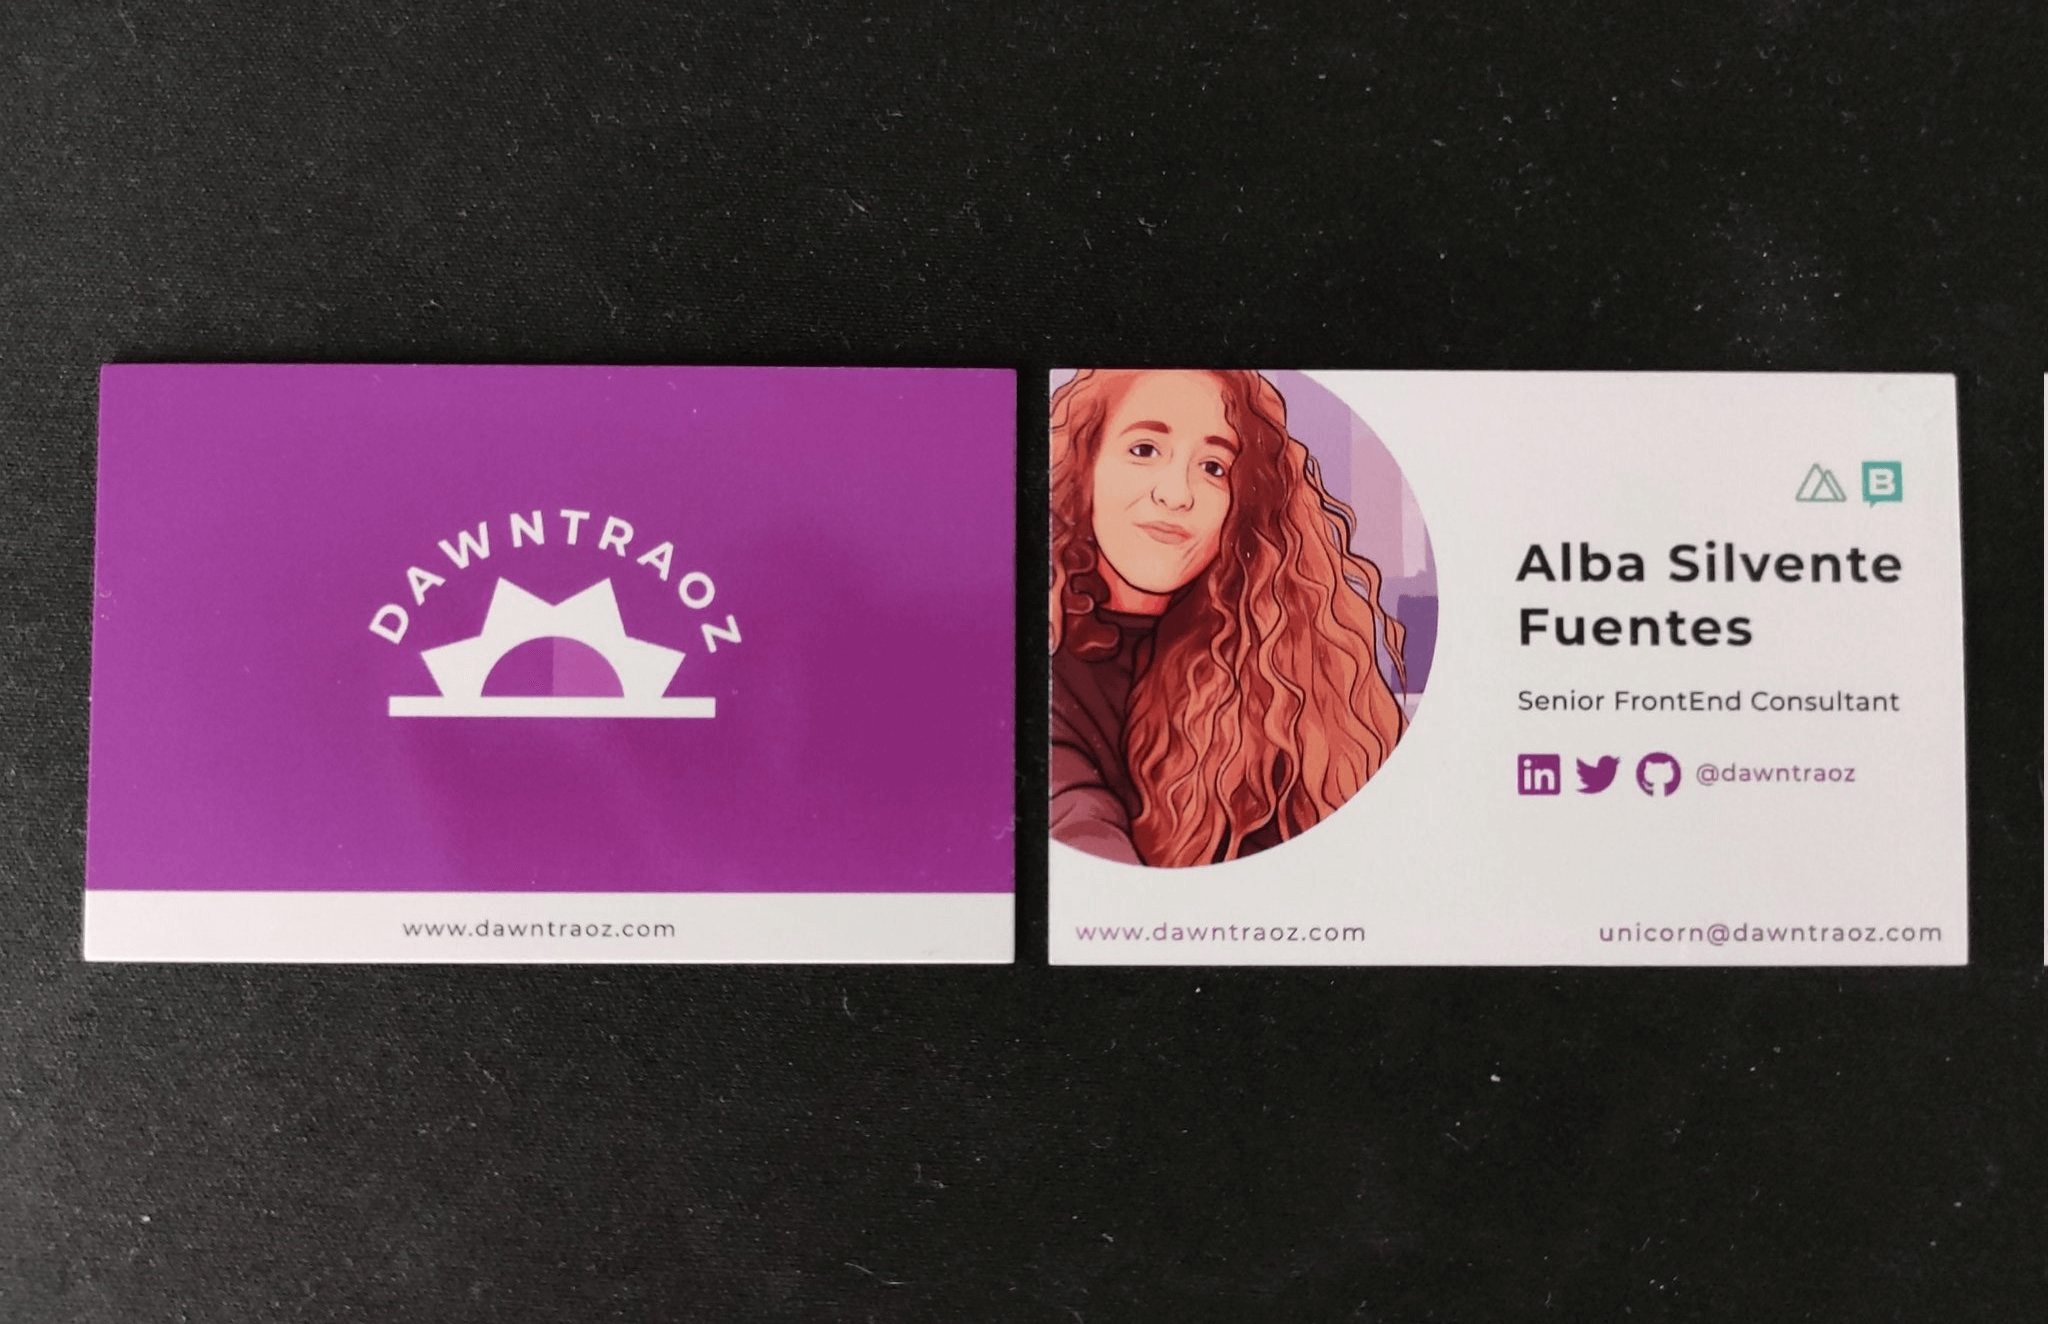 Business card design for Dawntraoz - Alba Silvente Fuentes brand